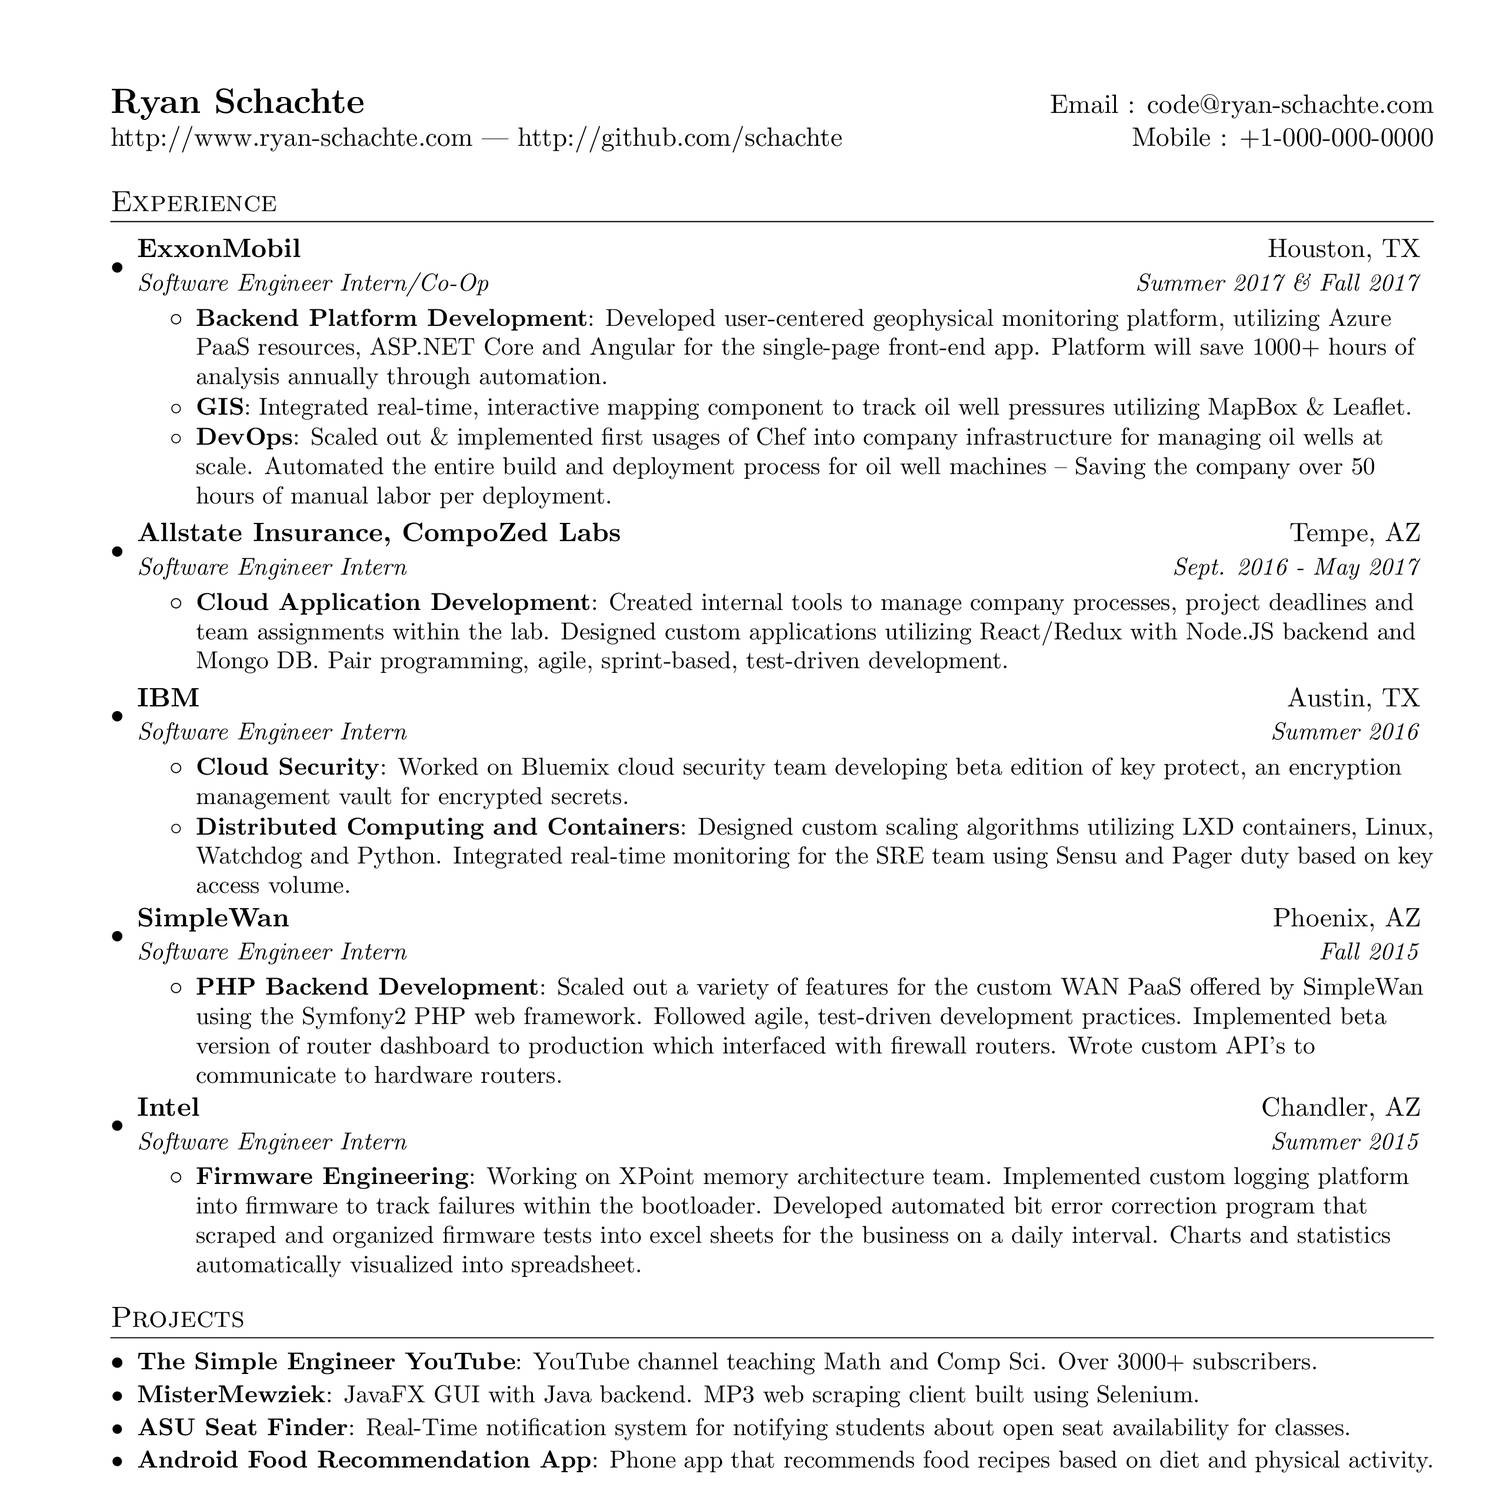 coursework on resume reddit